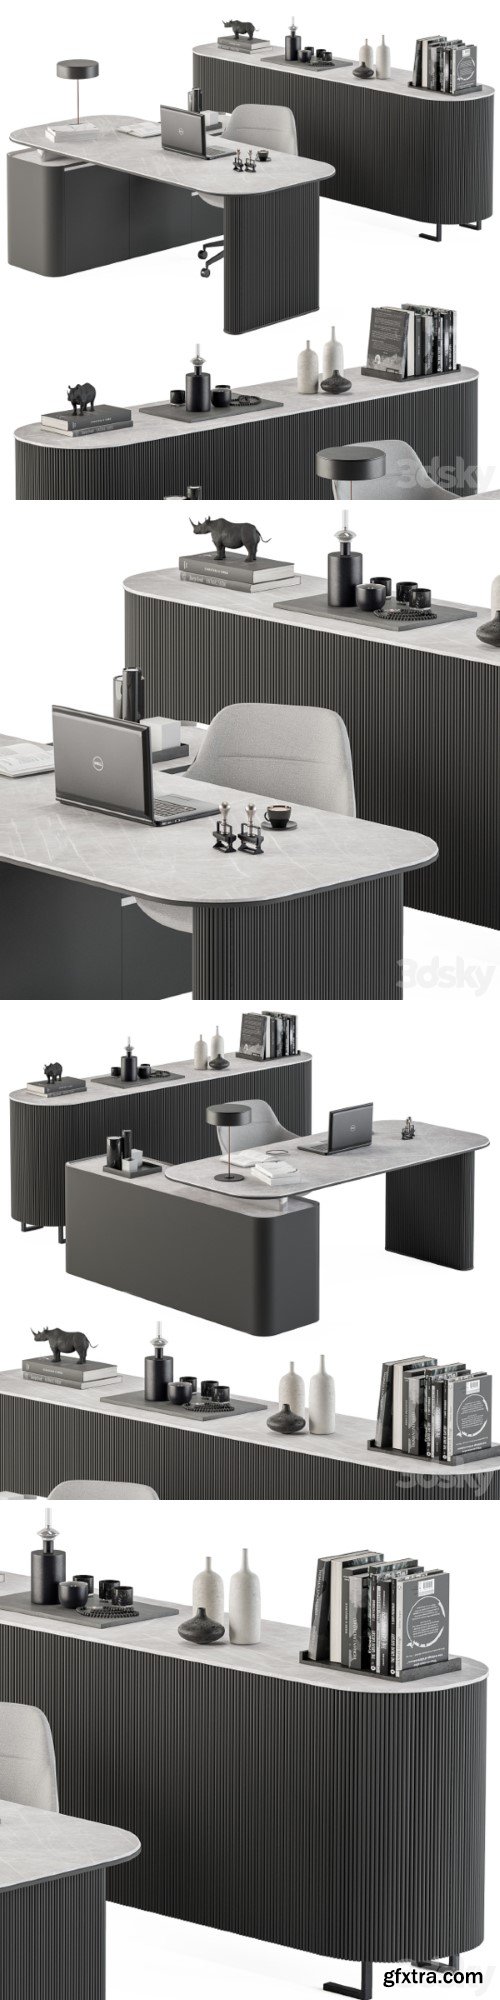 Pro 3DSky - Boss Desk Black and Gray - Office Furniture 236